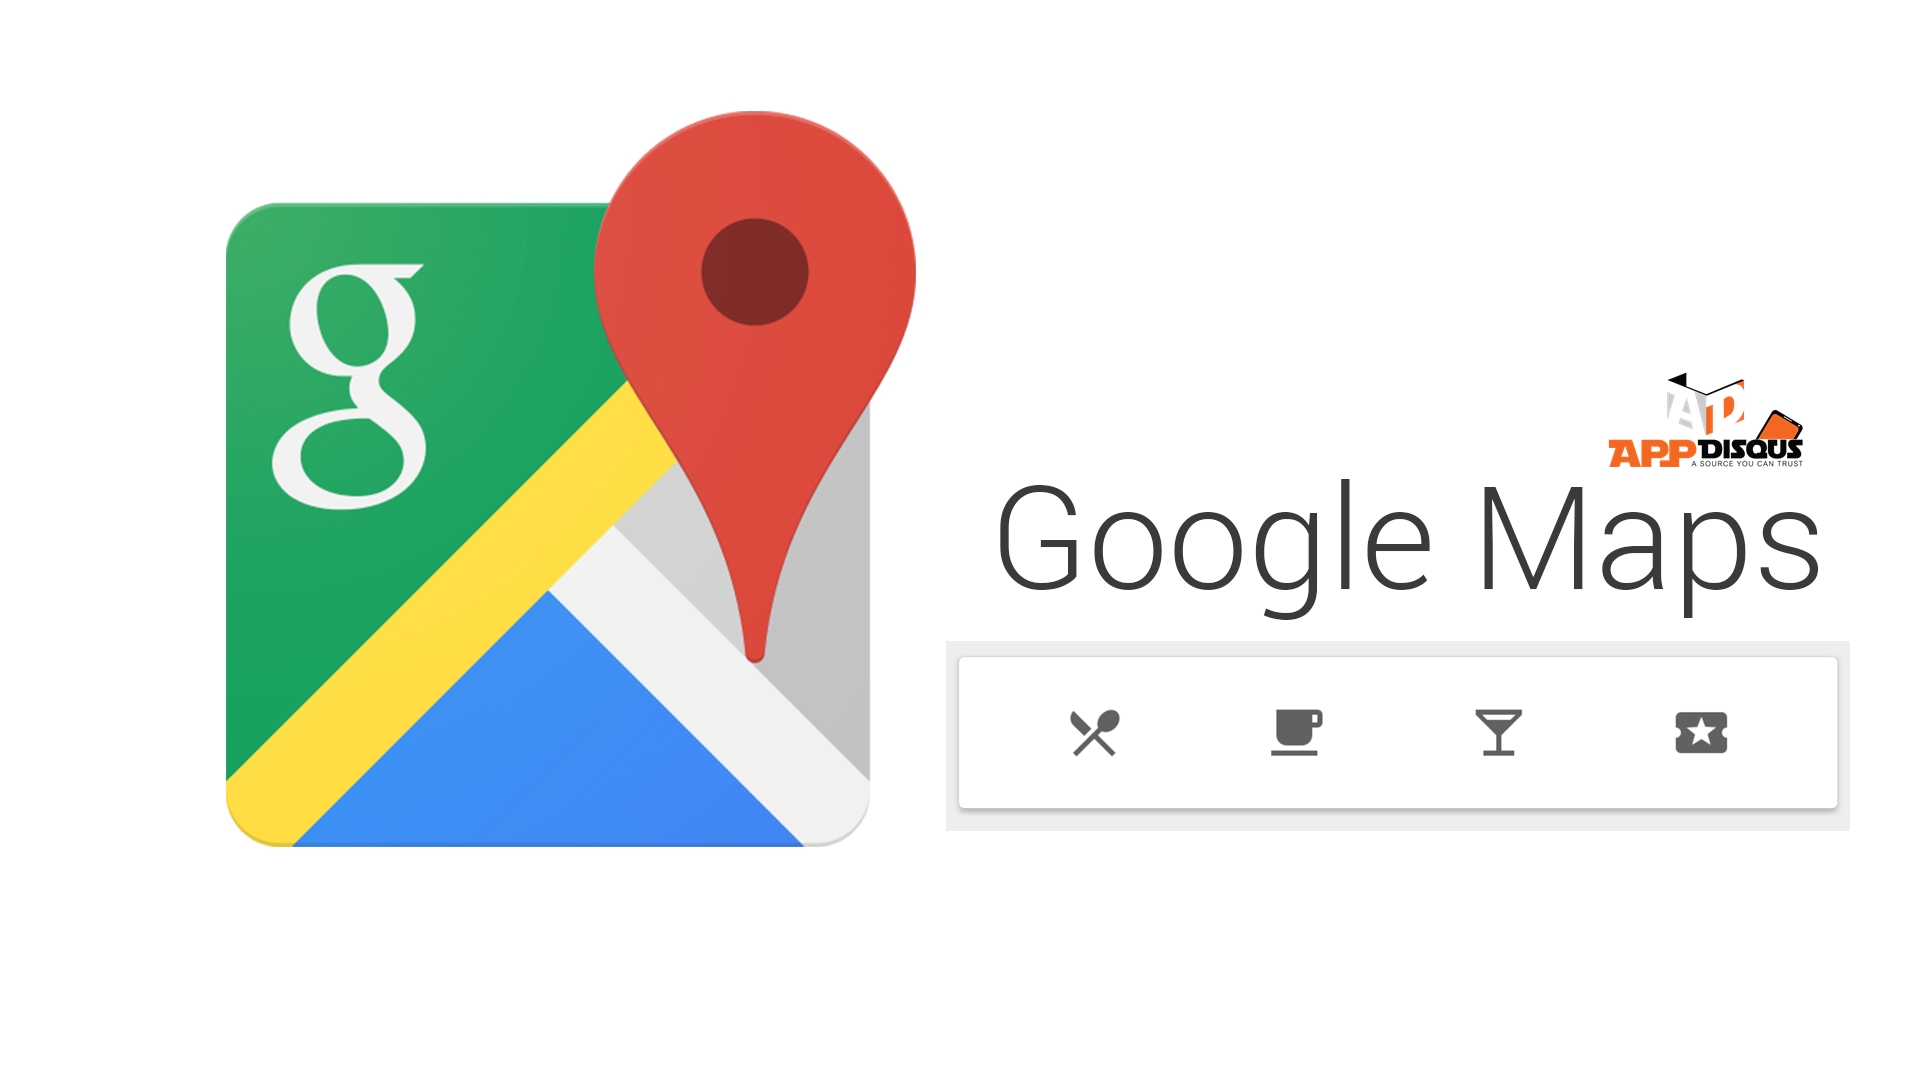 Google Maps | Google | Tip! มารู้จักและรู้วิธีใช้ 4 ไอคอนลัดบน Google Maps เพื่อค้นหาสถานที่ใกล้เคียงได้แบบง่ายดาย